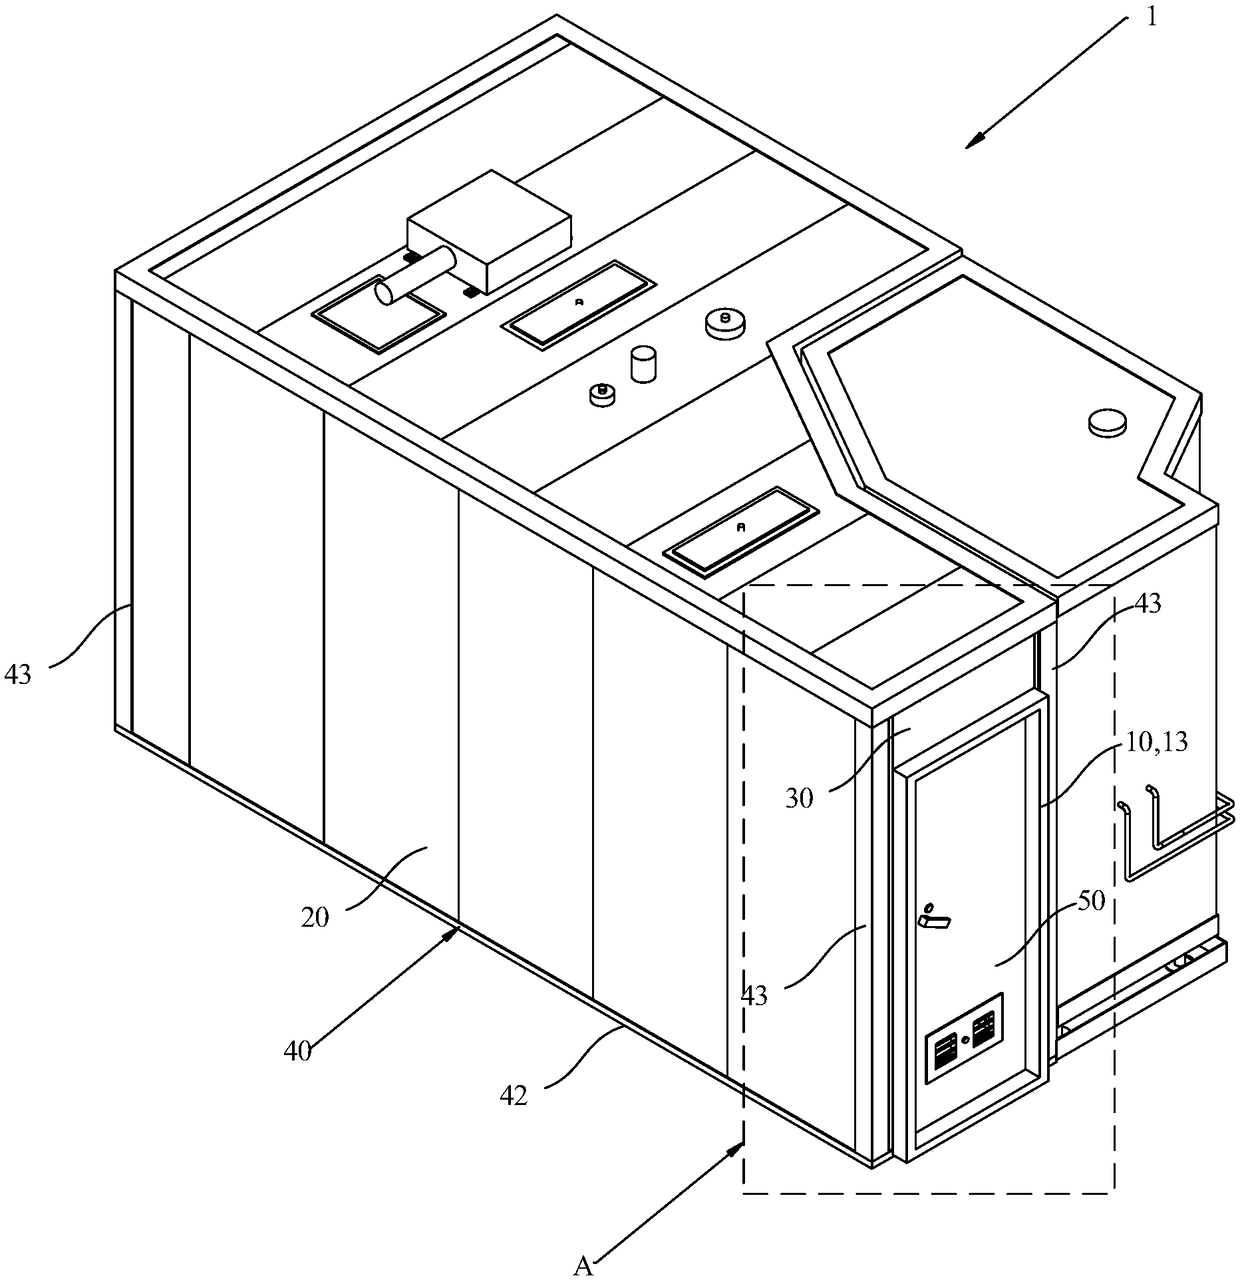 Modular unit compartment